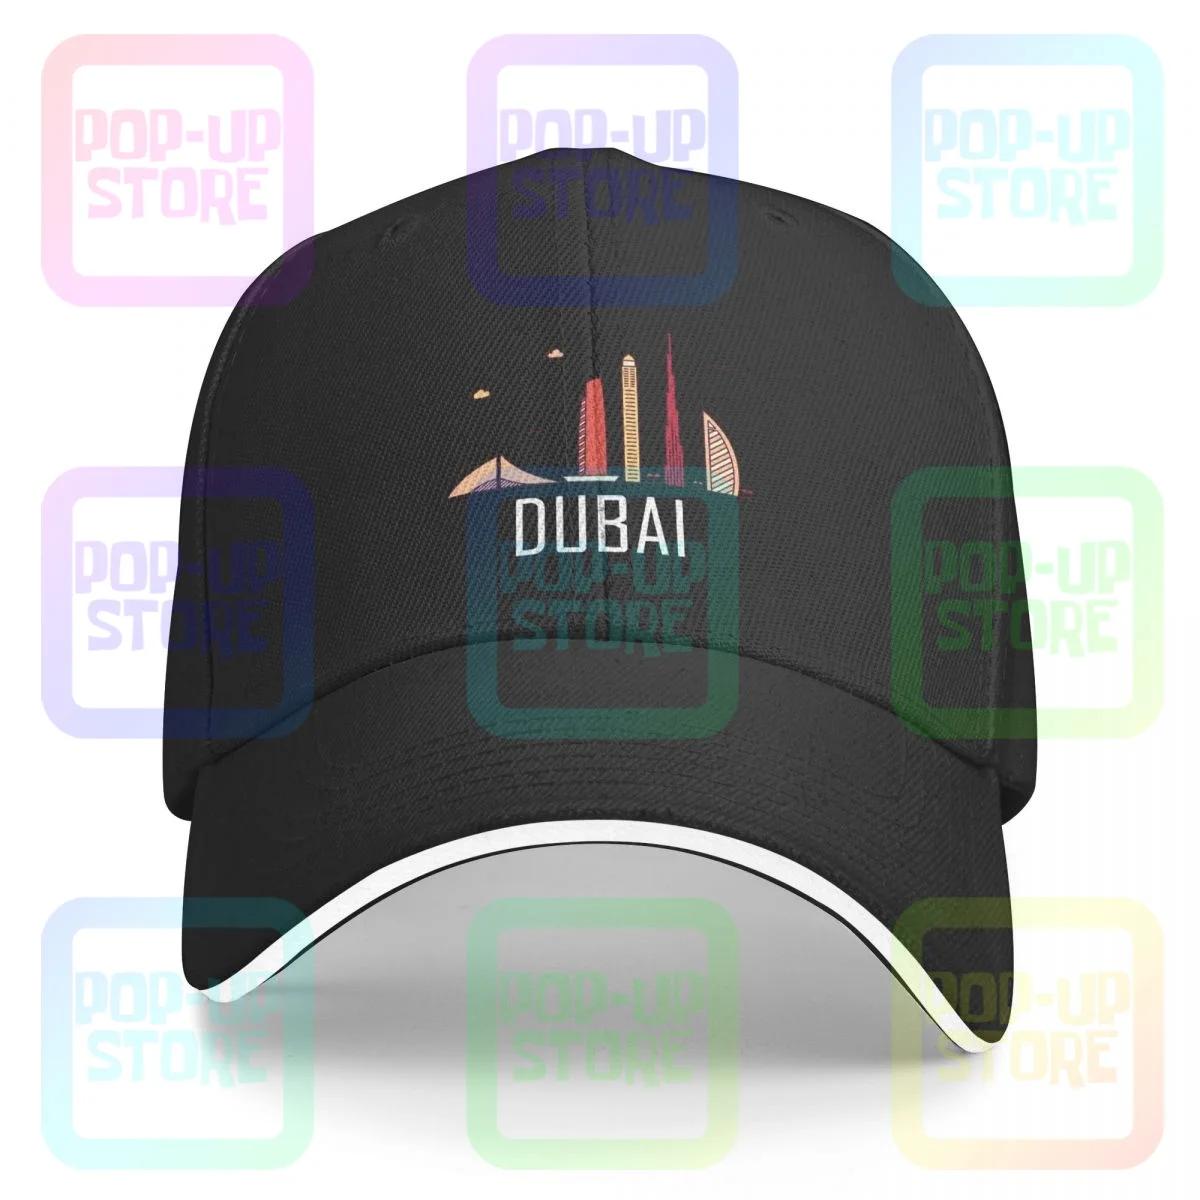 Khalifa Burj Al Arab Skyline Skyscraper Dubai Sandwich Cap Baseball Cap Trucker Hat Top Hot Deals Adjustable